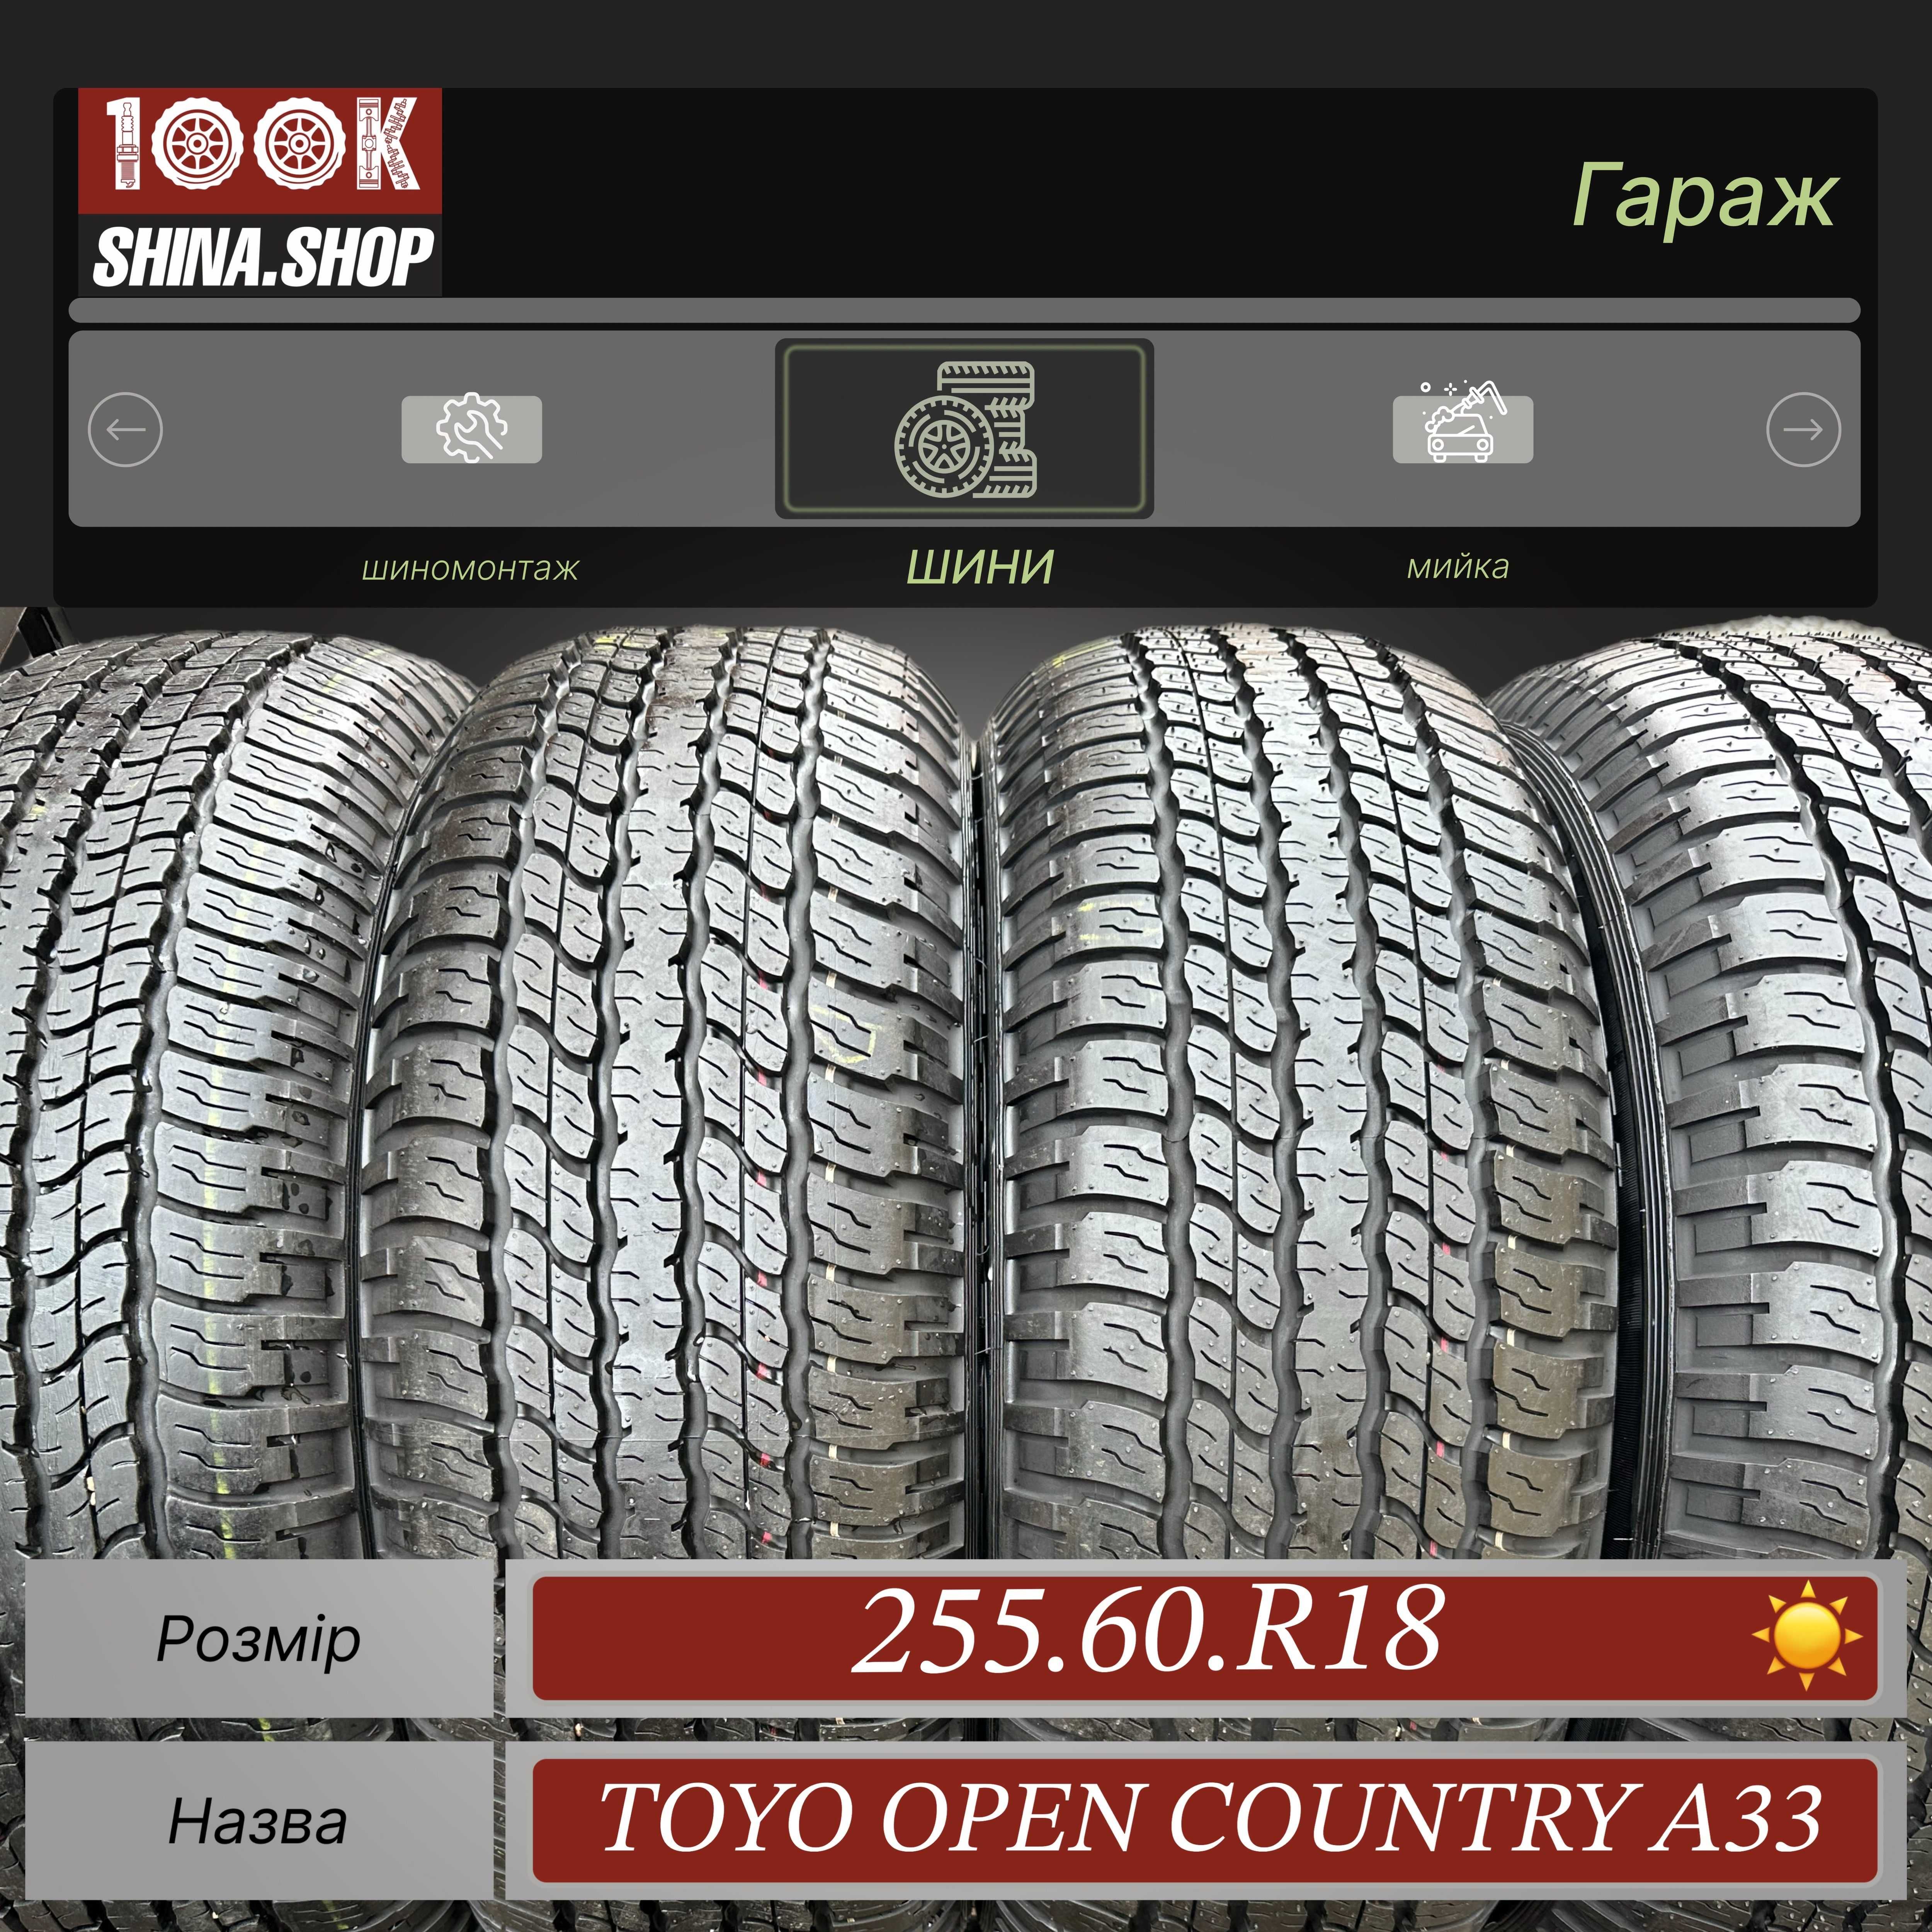 Шины Новые 255 60 R 18 Toyo Open Country А33 Резина комплект